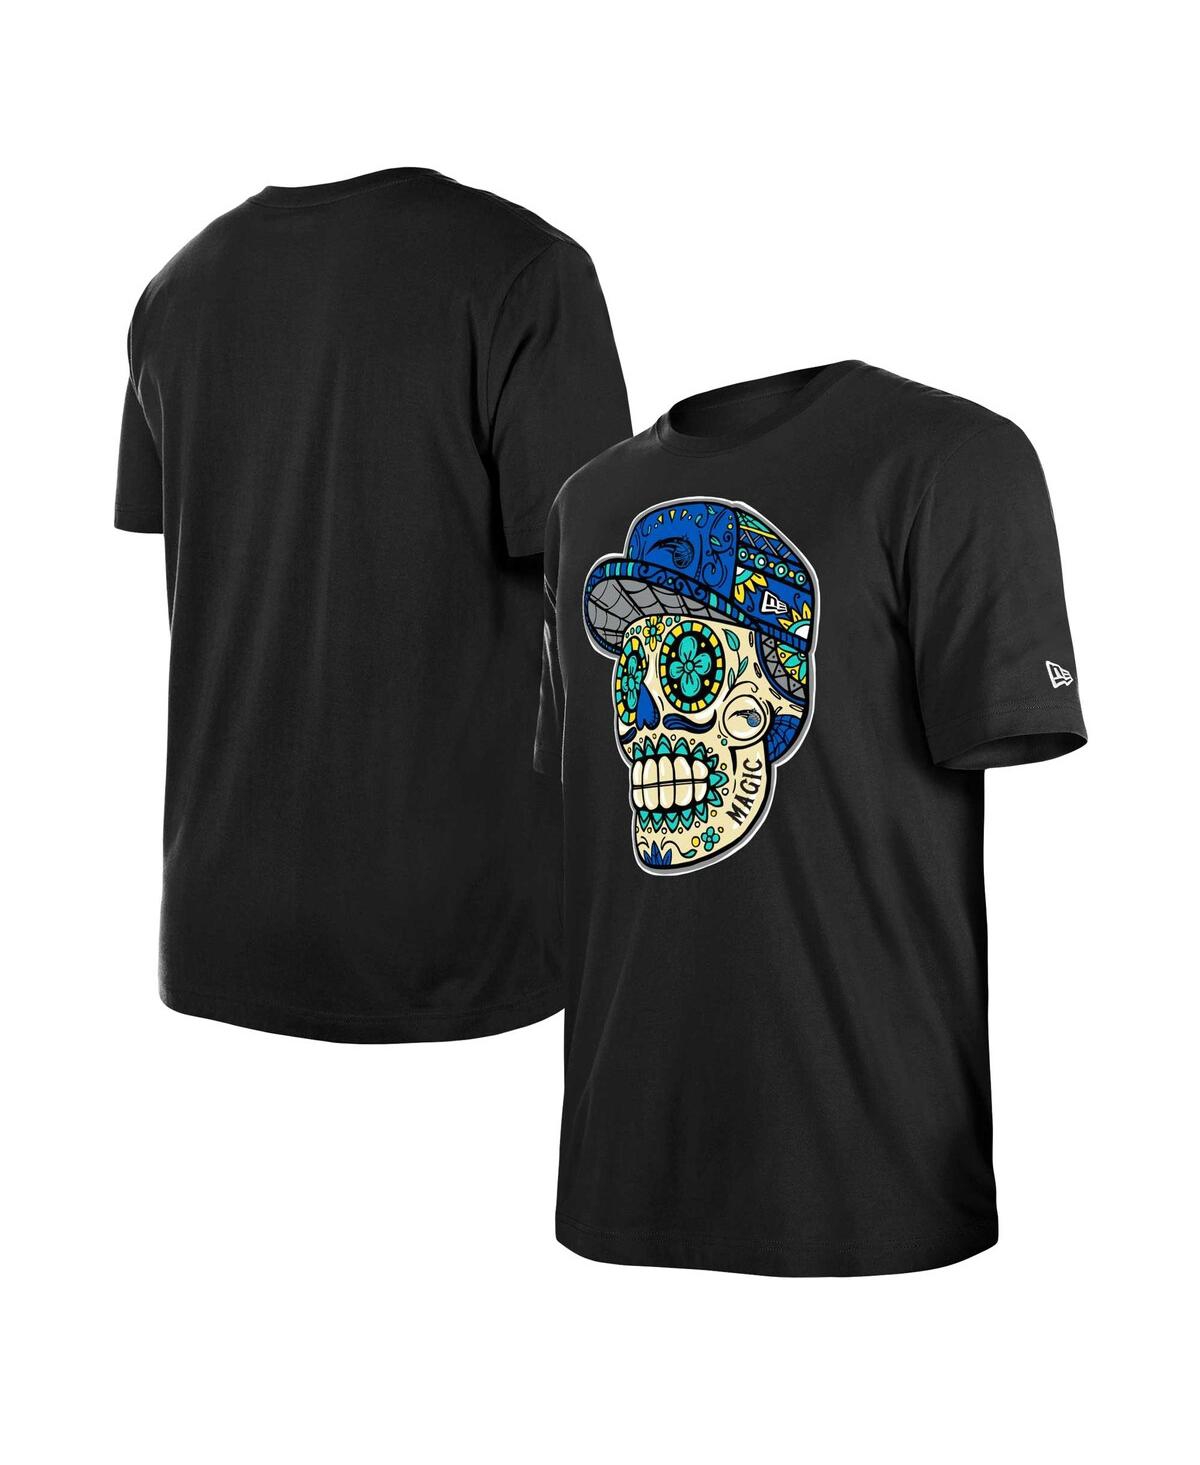 Men's and Women's Black Orlando Magic Sugar Skull T-Shirt - Black